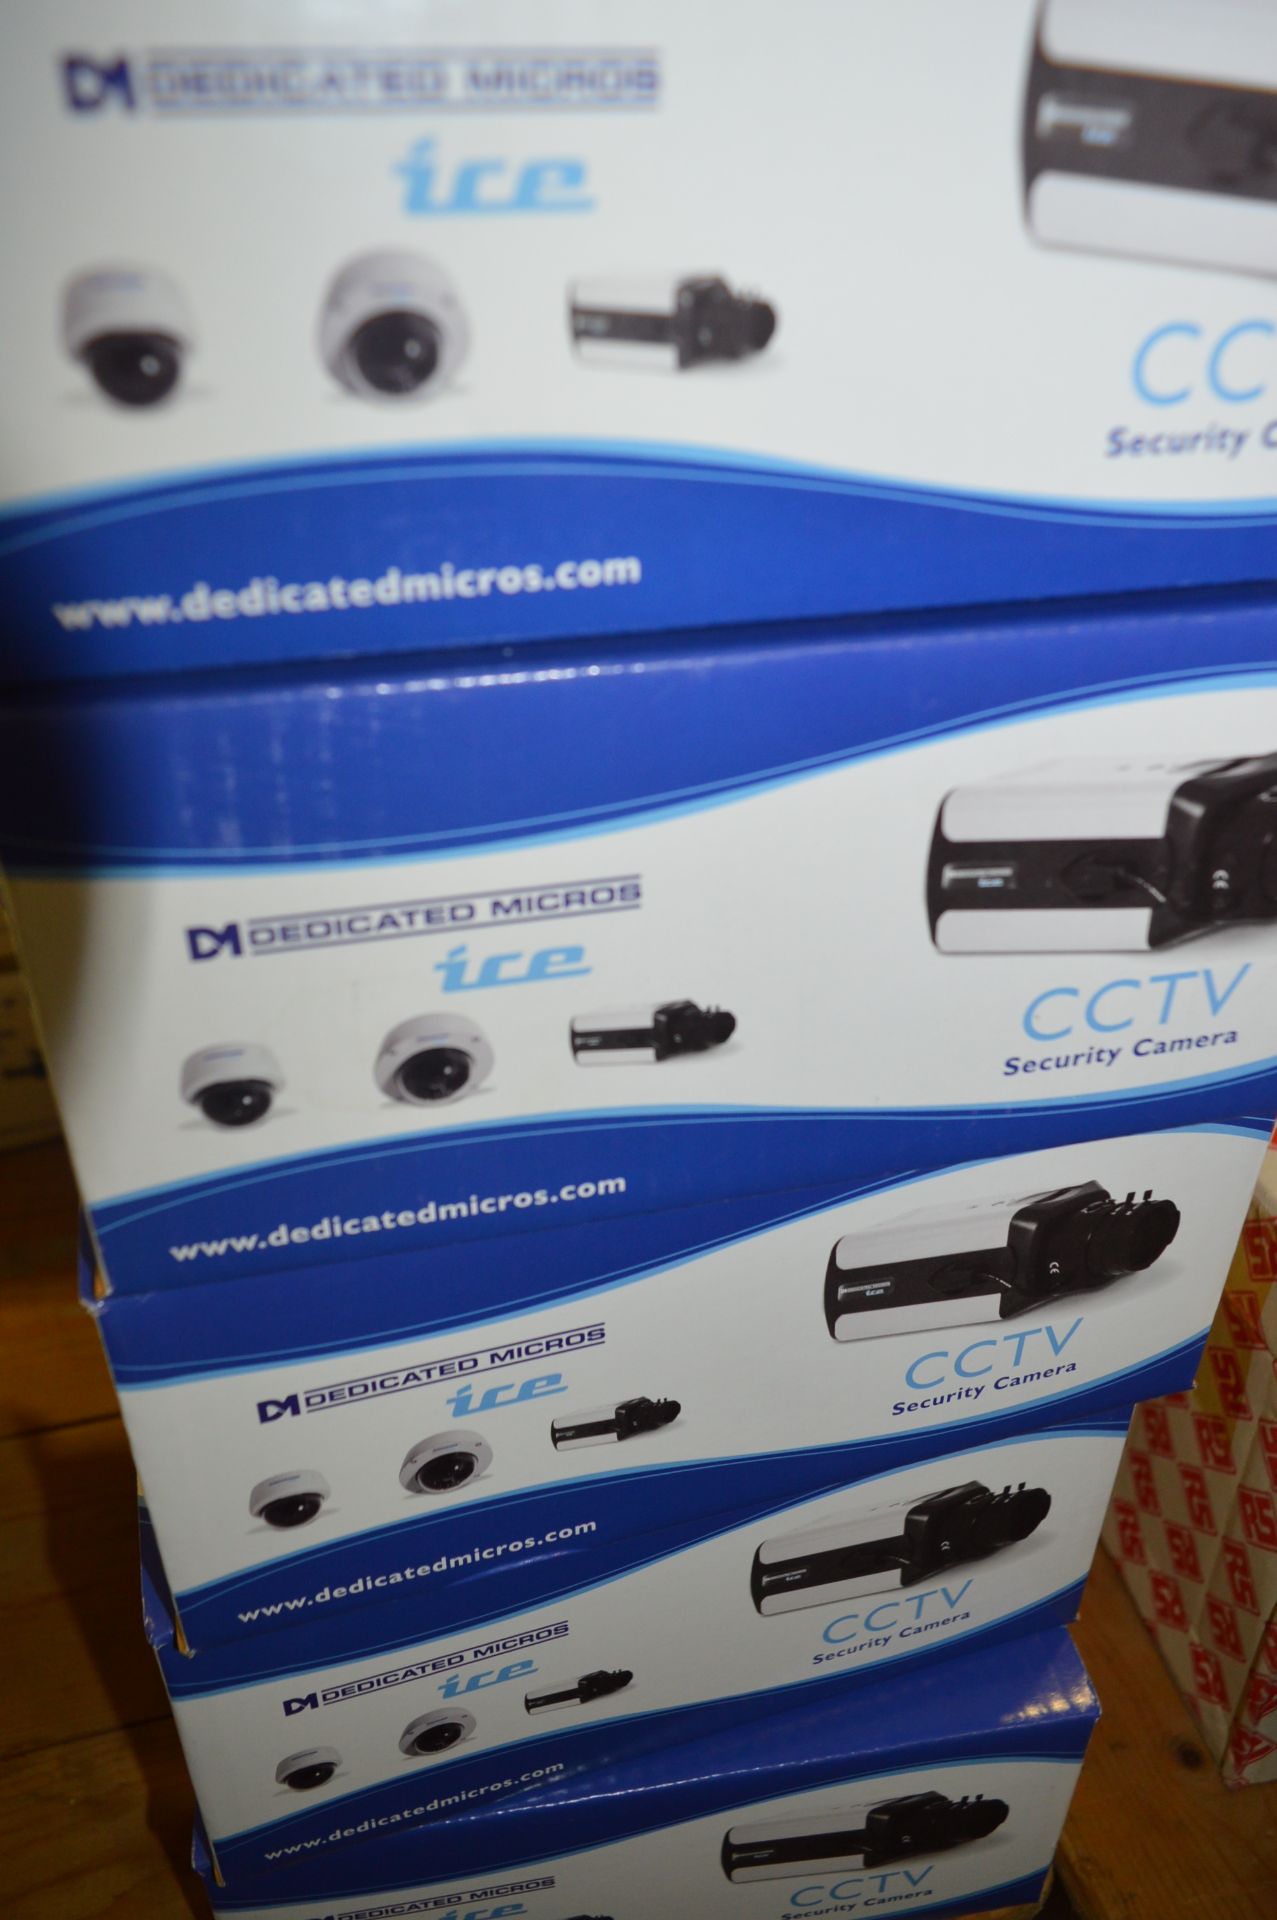 *Five CCTV Security Cameras B2XHT/L